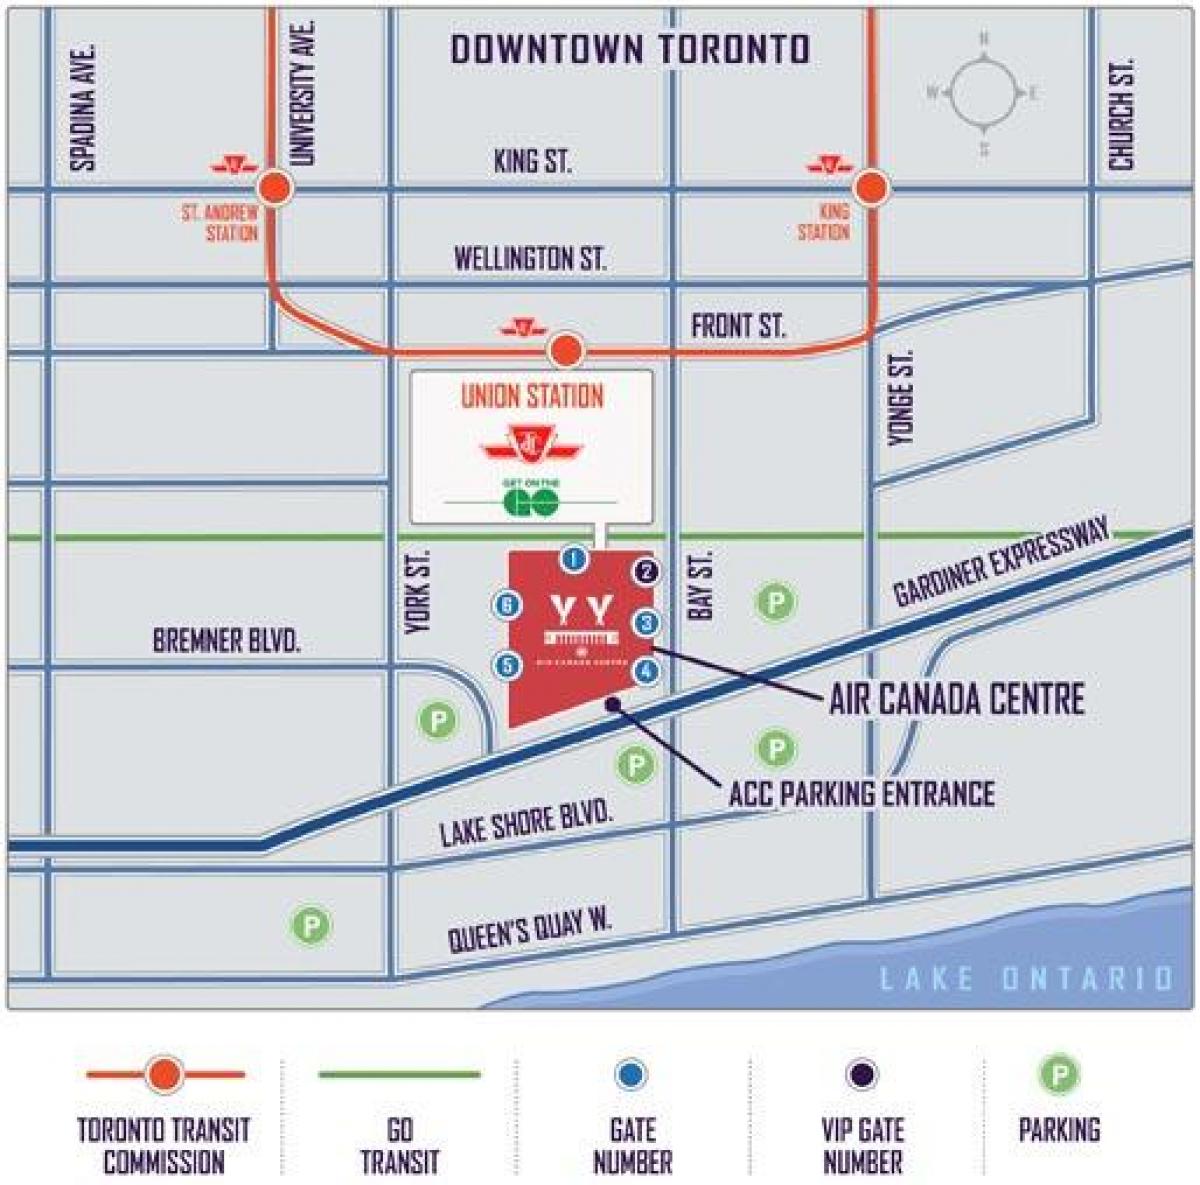 Mapa da Air Canada parque de estacionamento do Centro - ACC